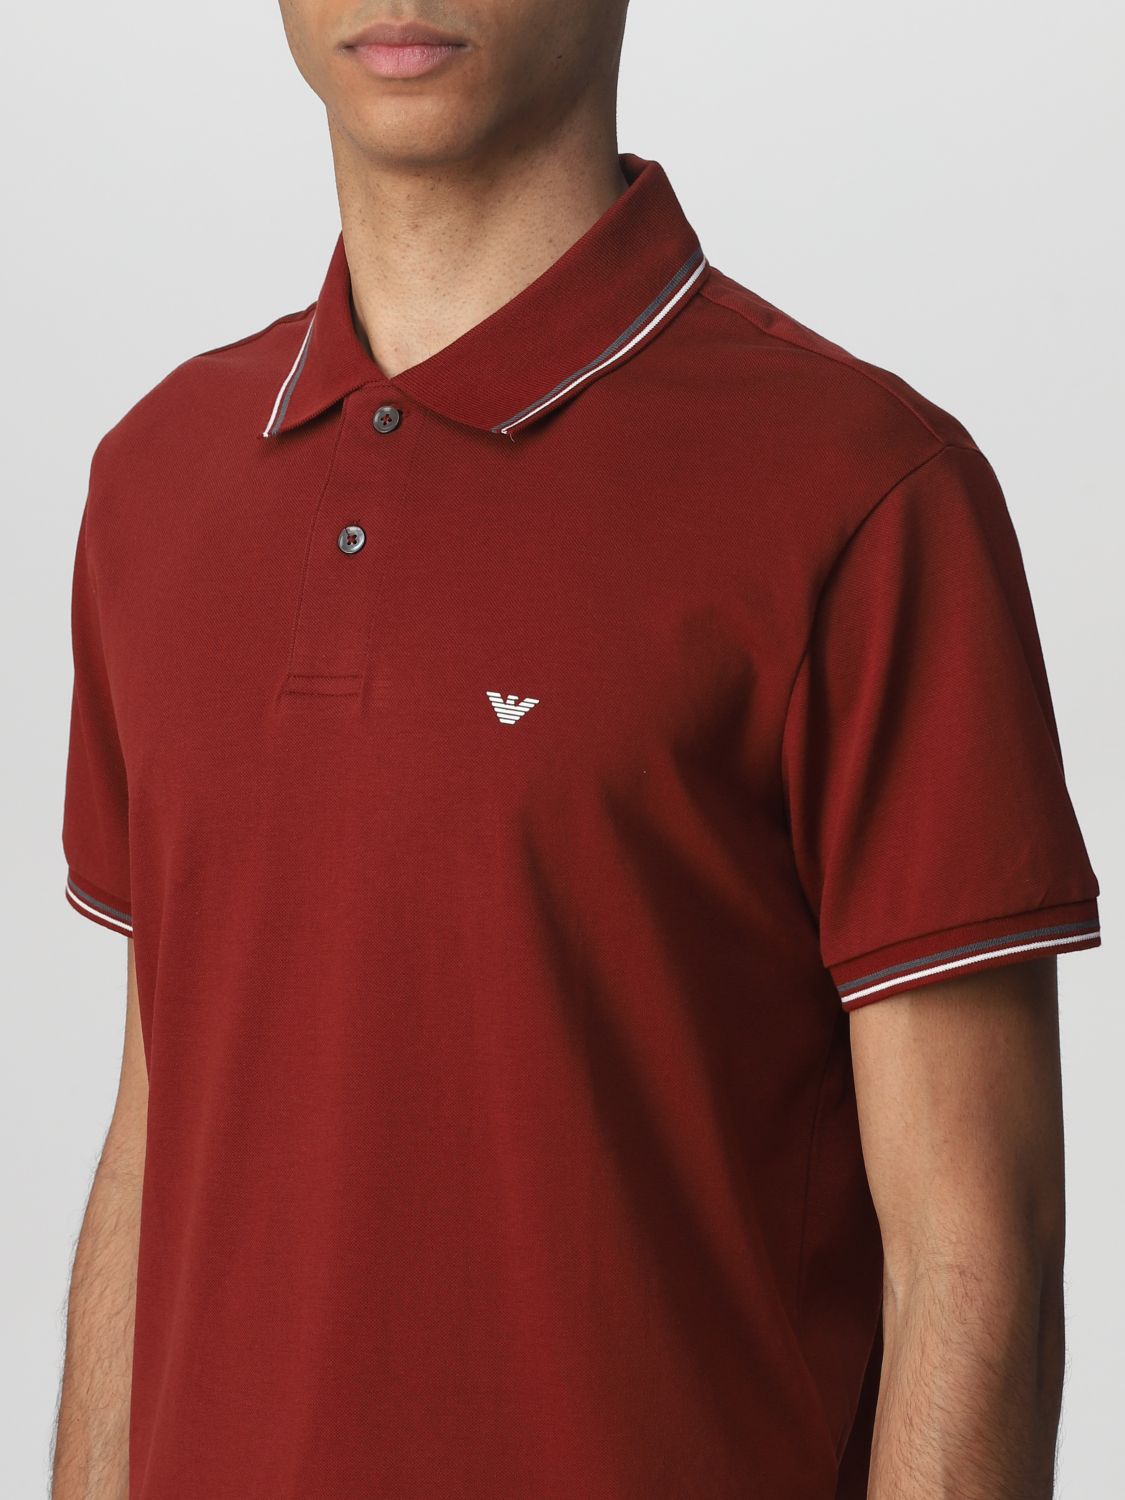 Emporio Armani Outlet: polo shirt for man - Brick Red Emporio Armani polo shirt 8N1FB41JPTZ online on GIGLIO.COM